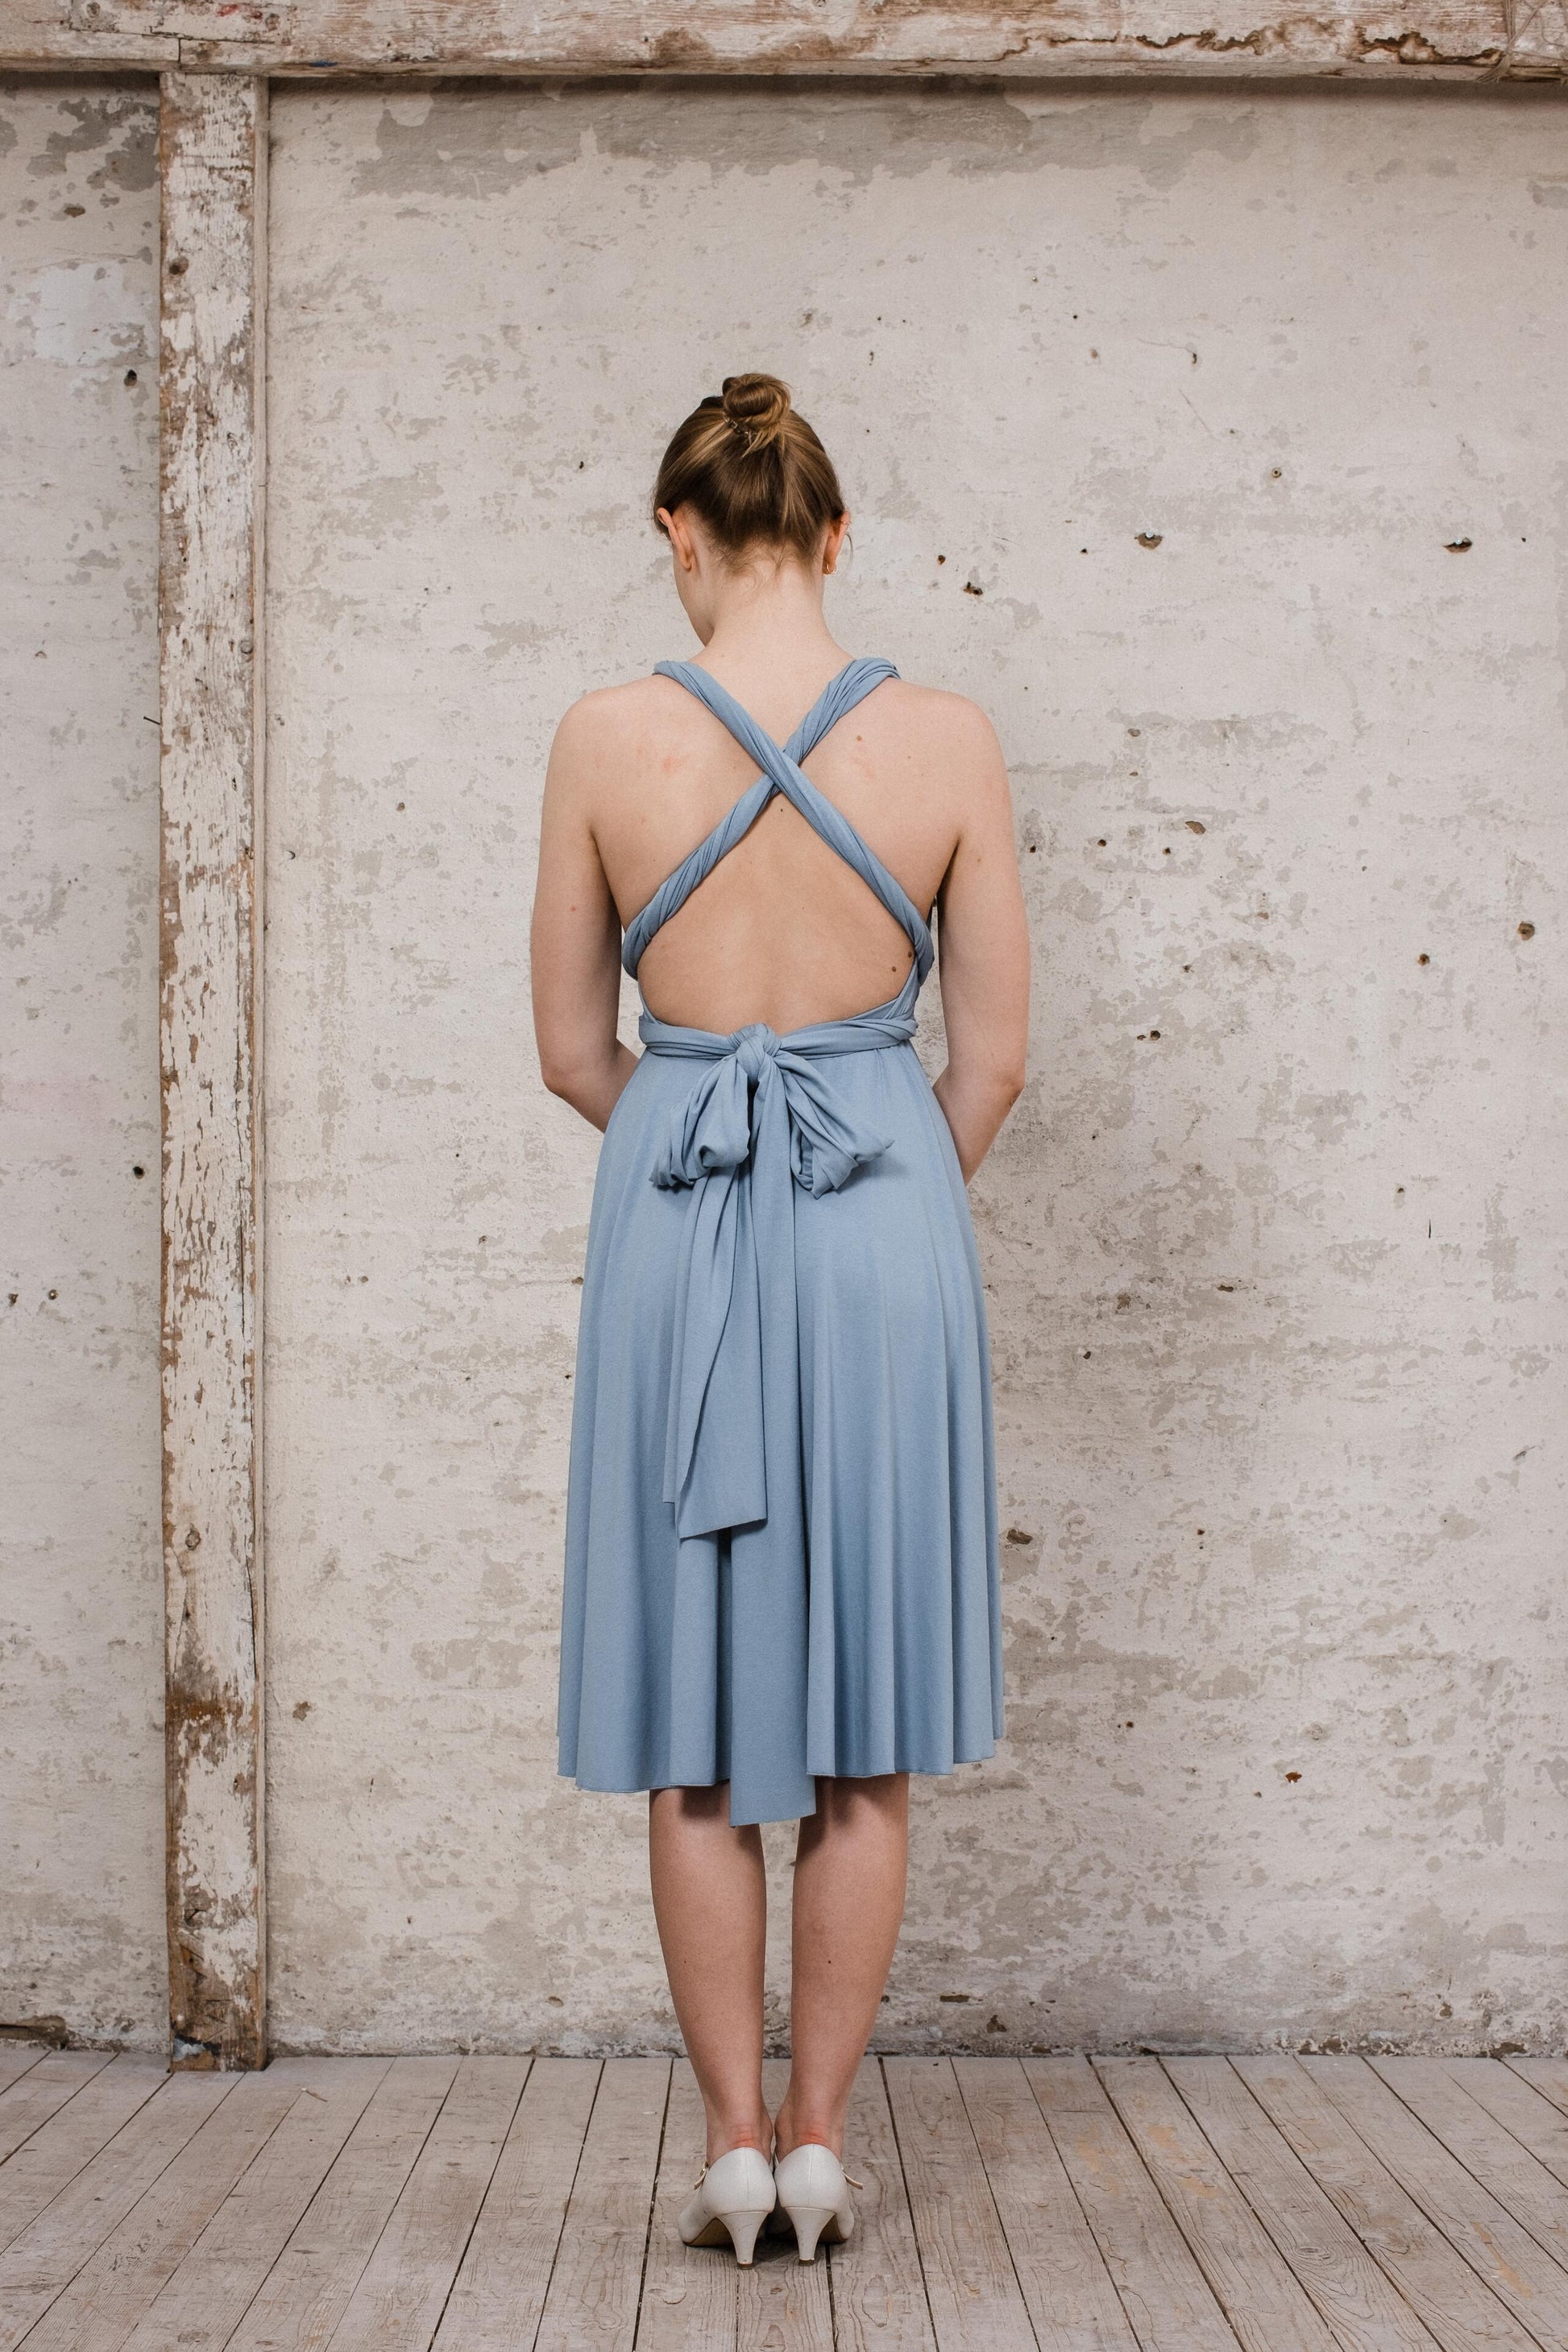 Infintiy Dress kurzes Multitie-Kleid in Taubenblau